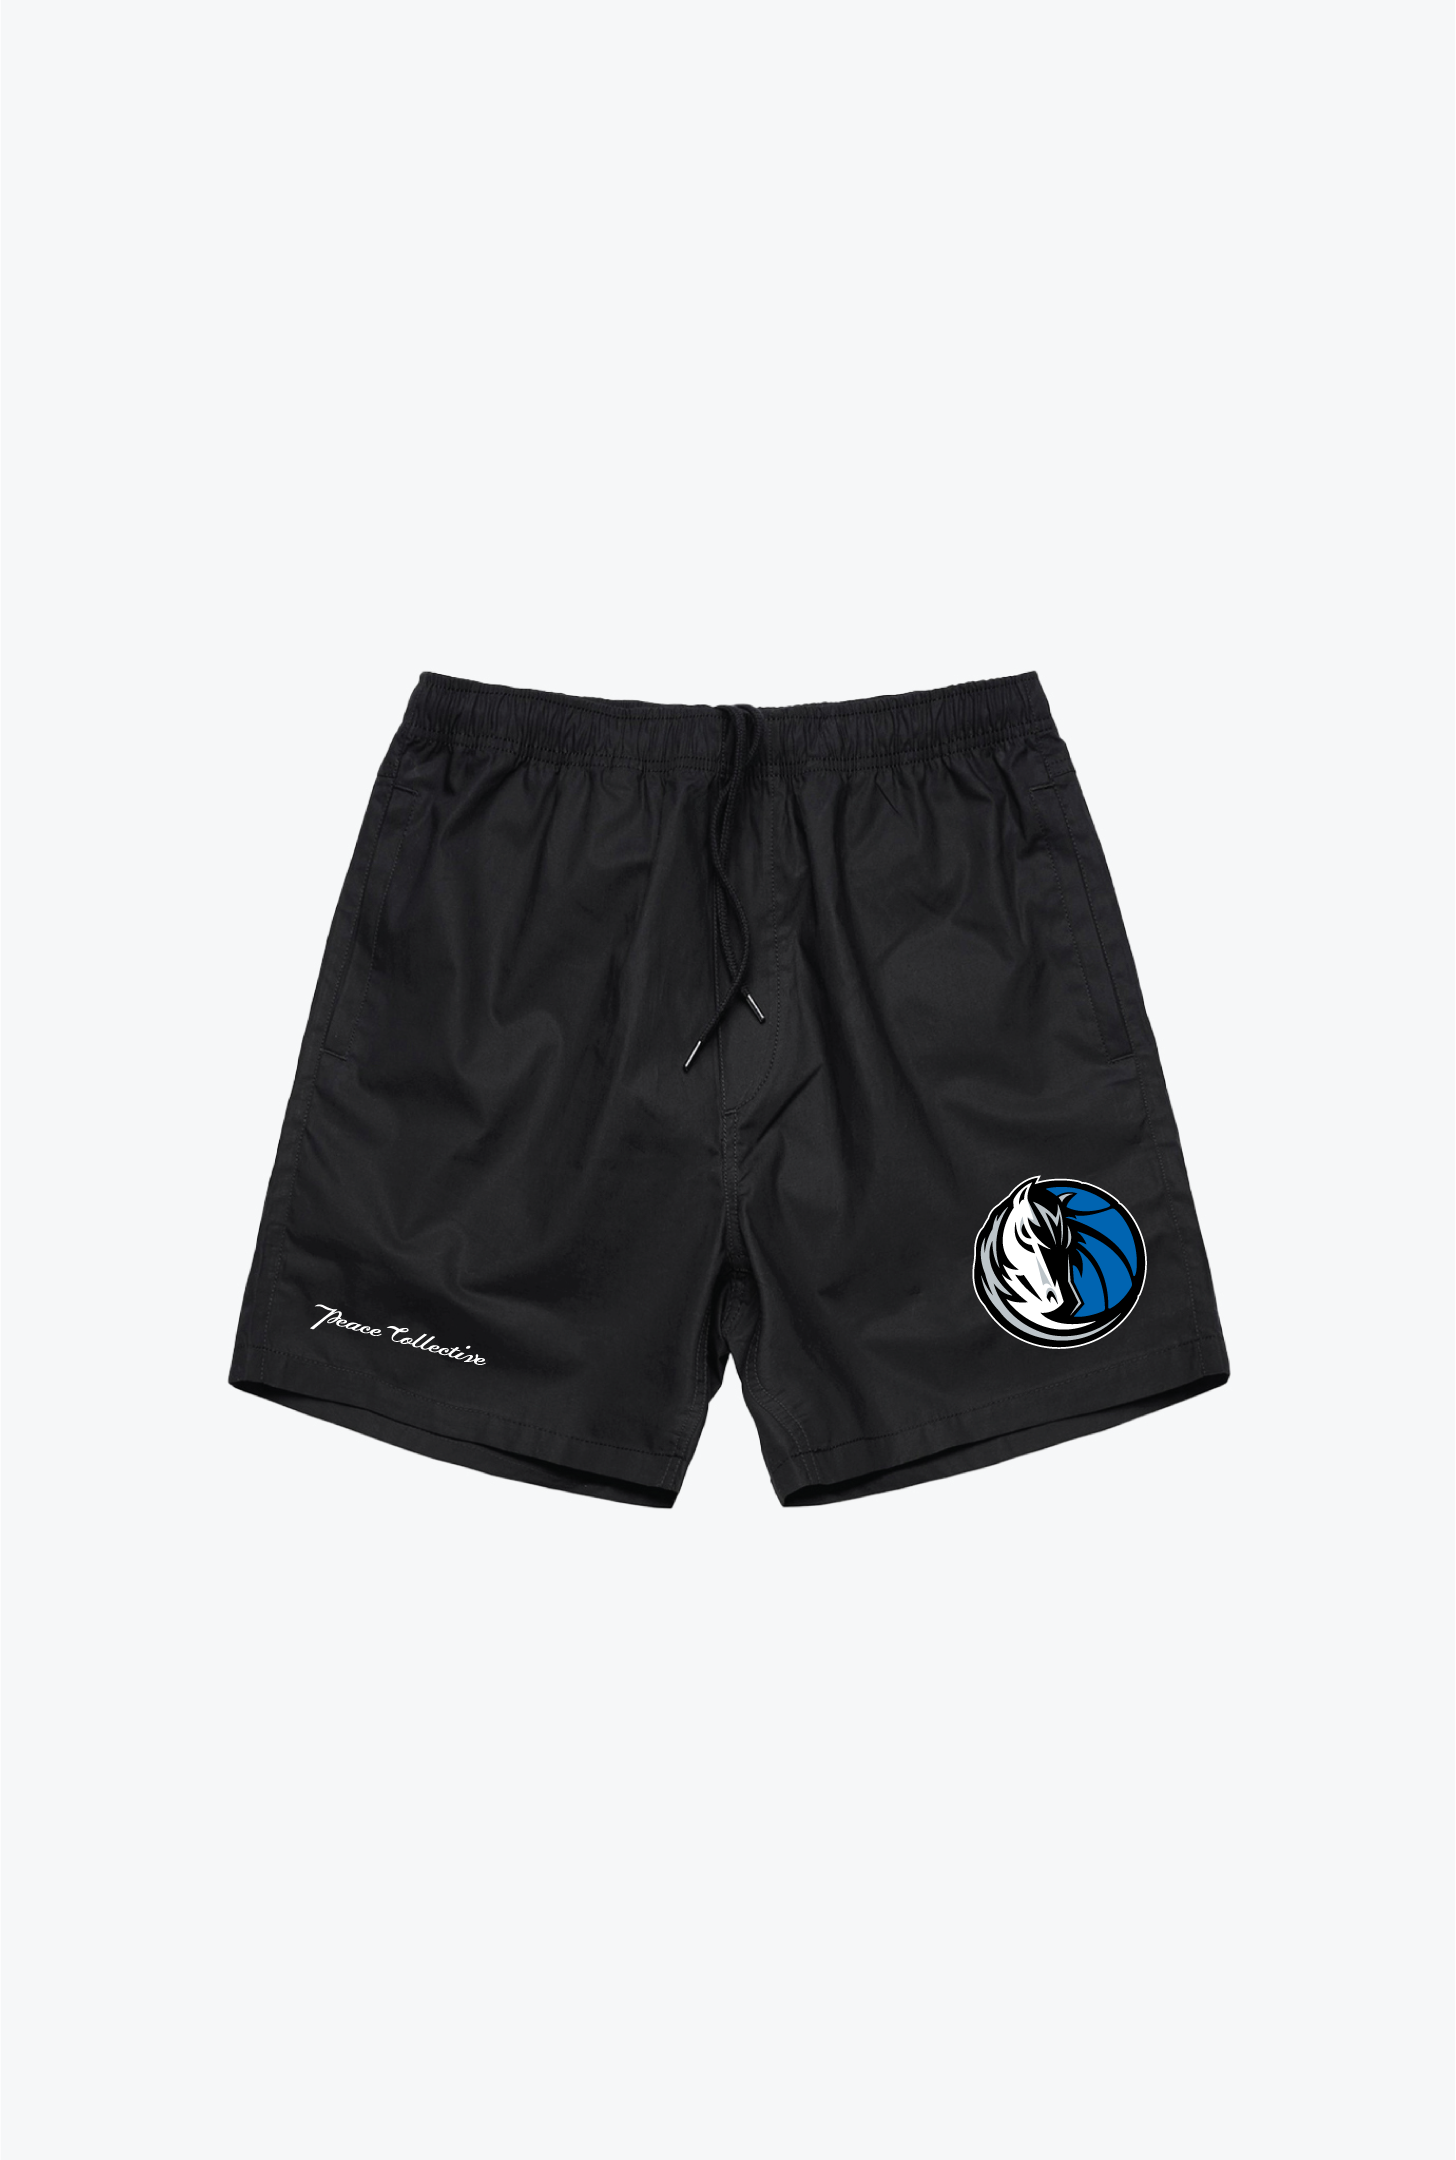 Dallas Mavericks Board Shorts - Black